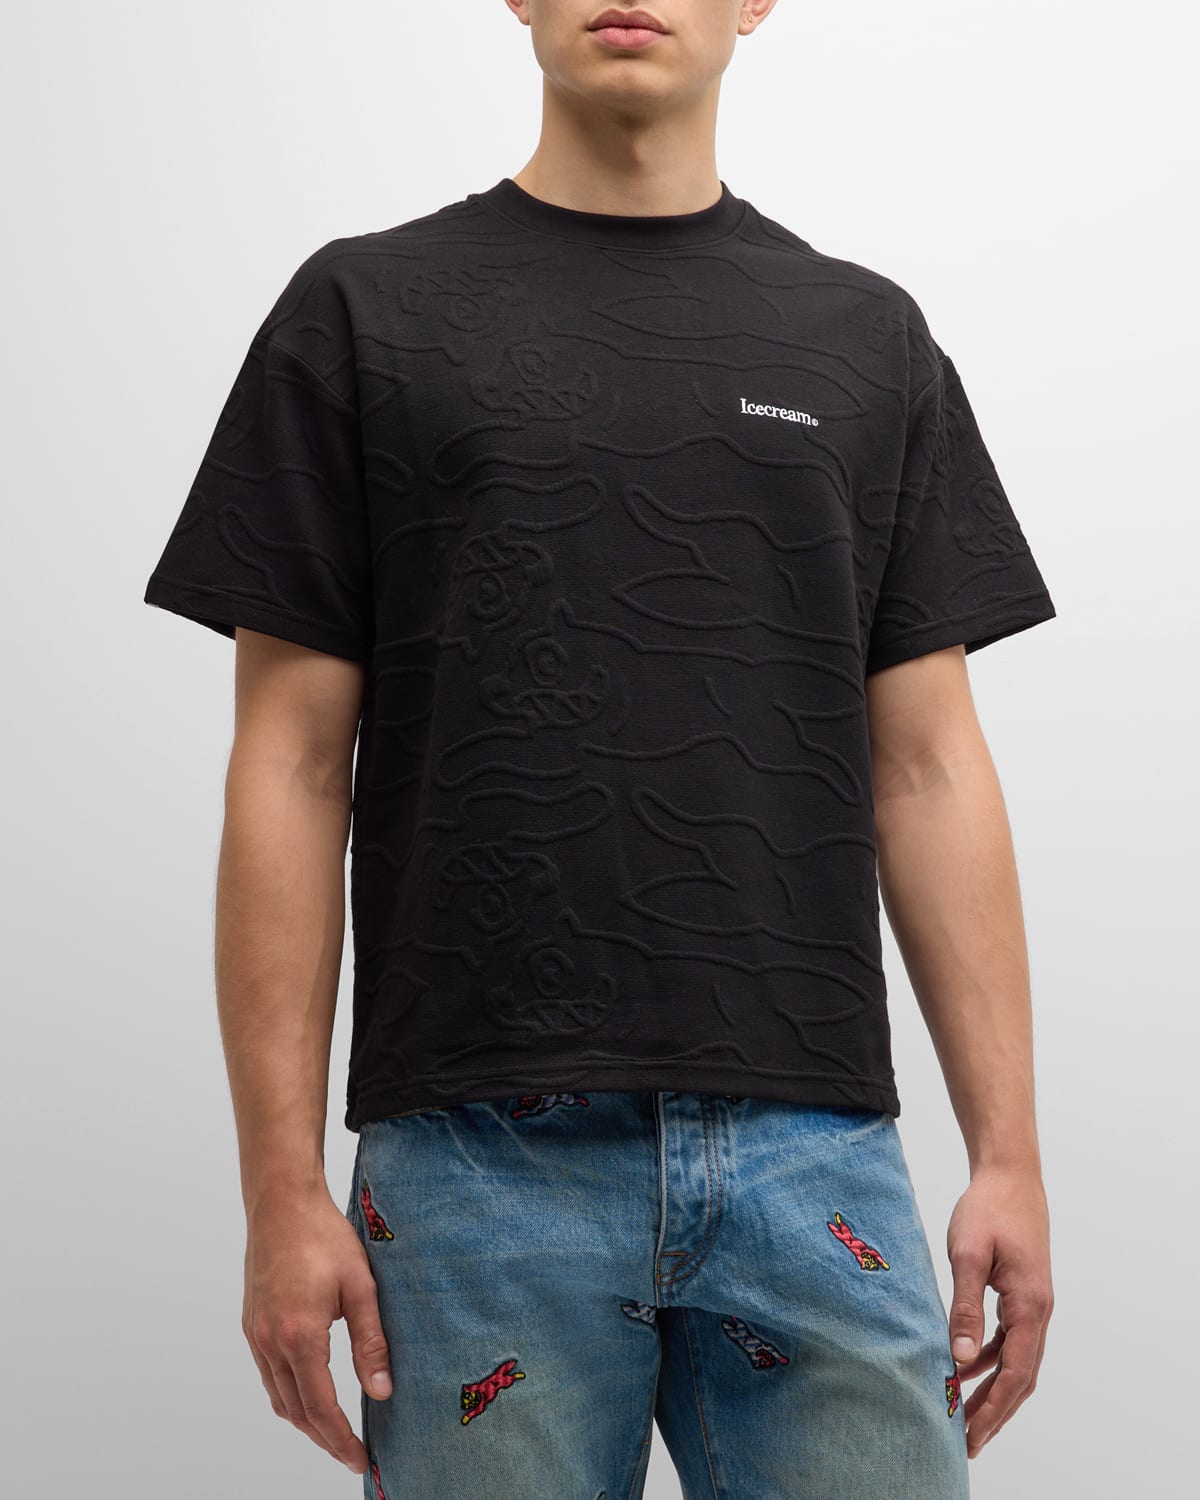 Shop Icecream Men's Blackened Oversize Knit T-shirt